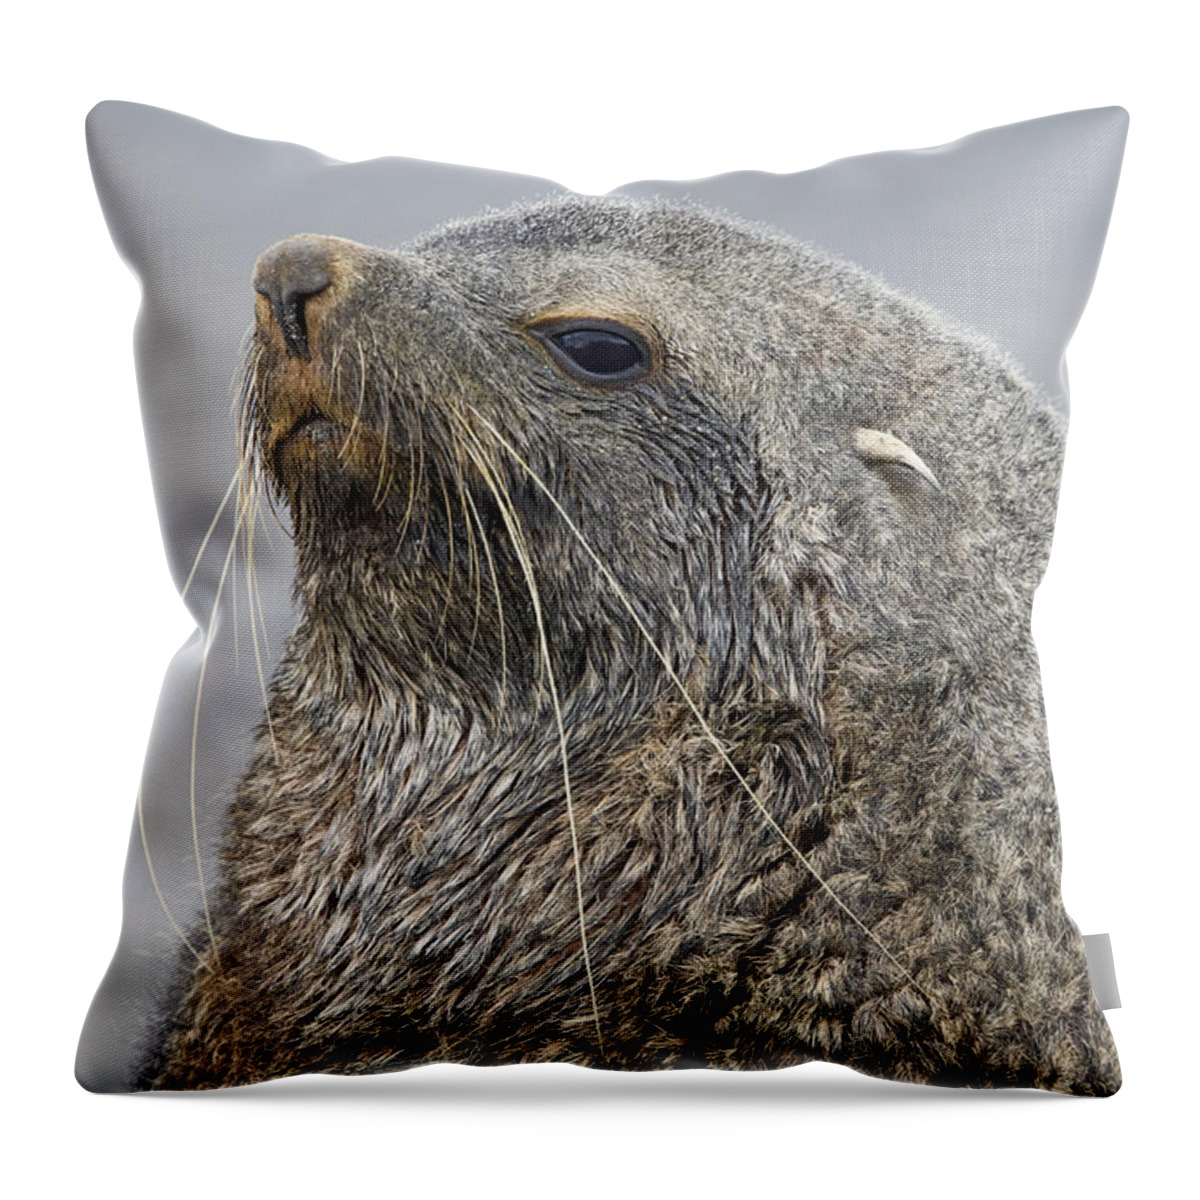 Flpa Throw Pillow featuring the photograph Antarctic Fur Seal Bull South Georgia by Dickie Duckett